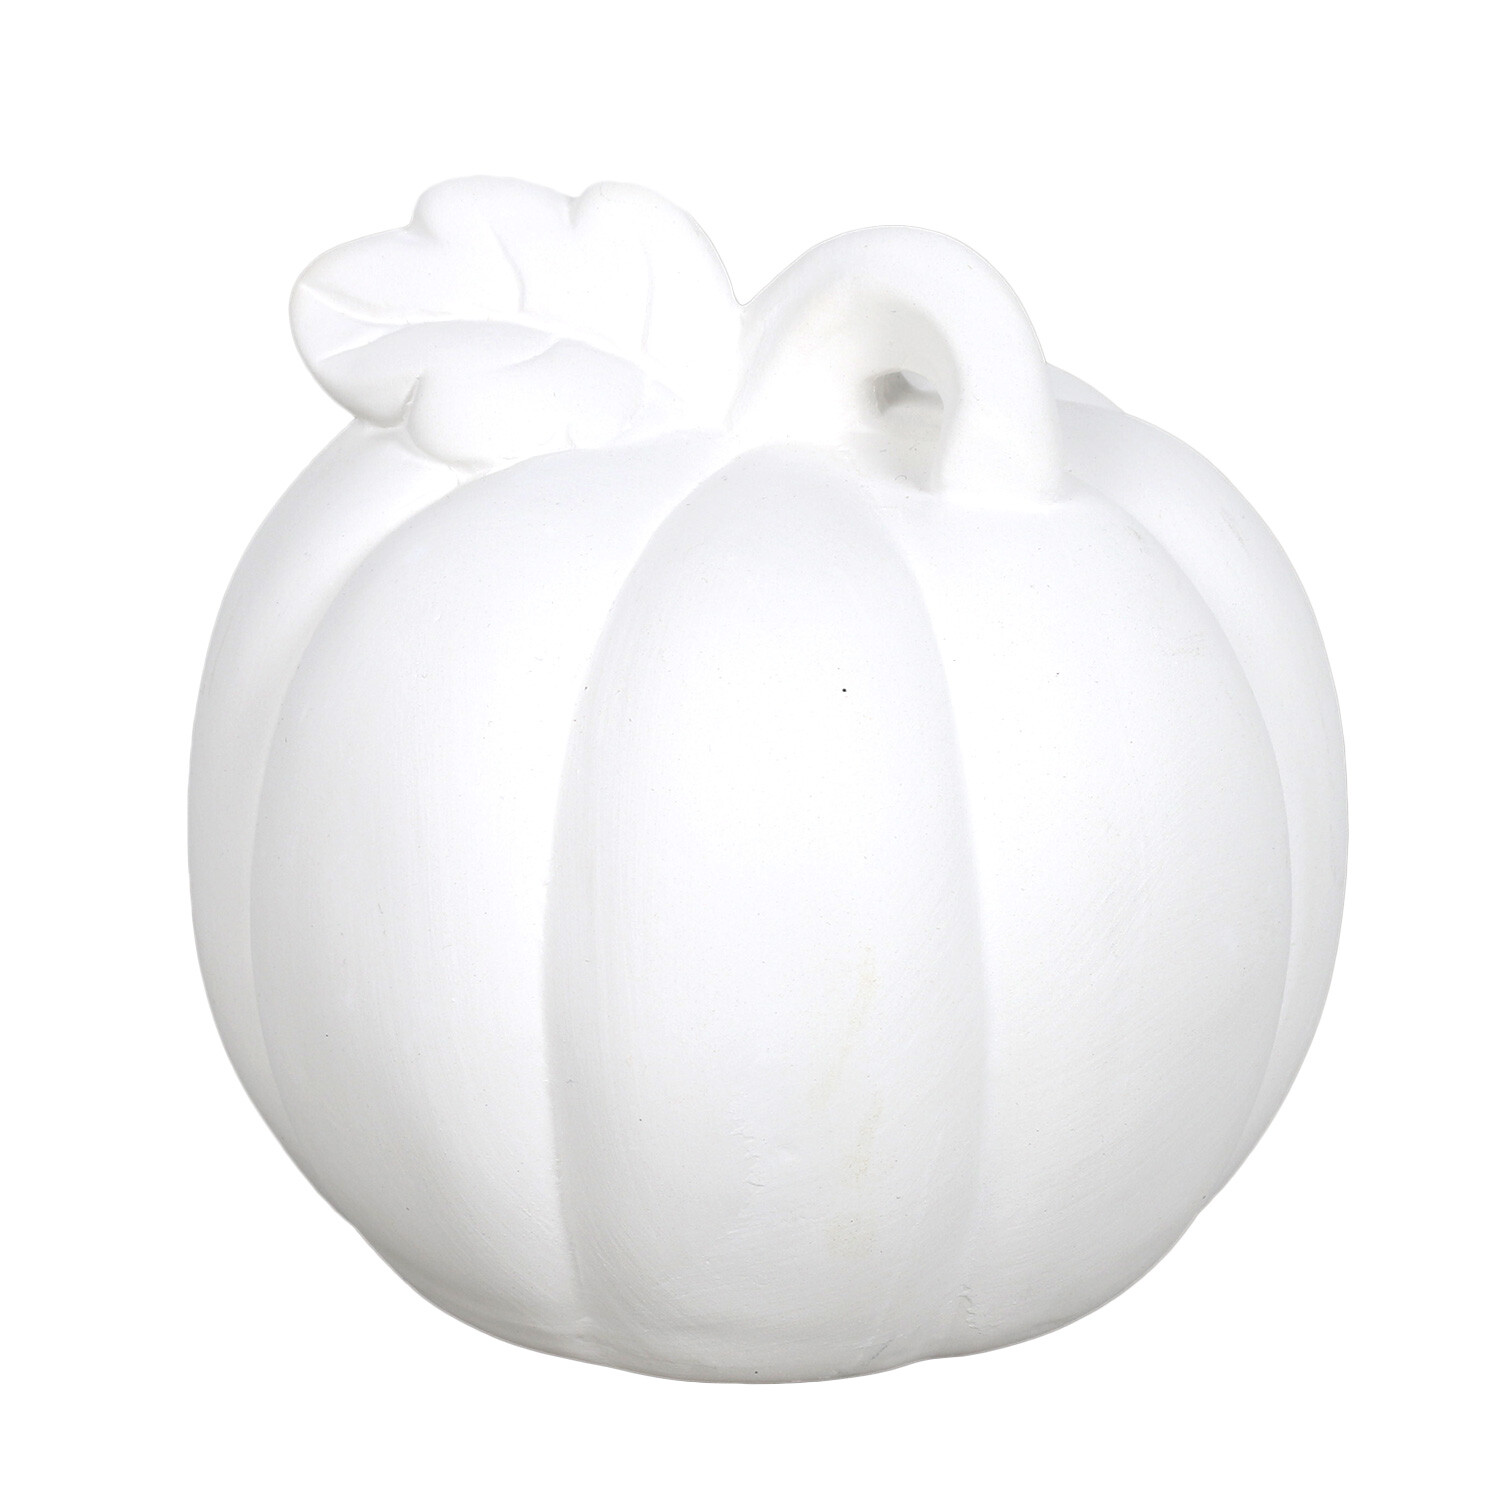 Ceramic Pumpkin with Leaf - White Image